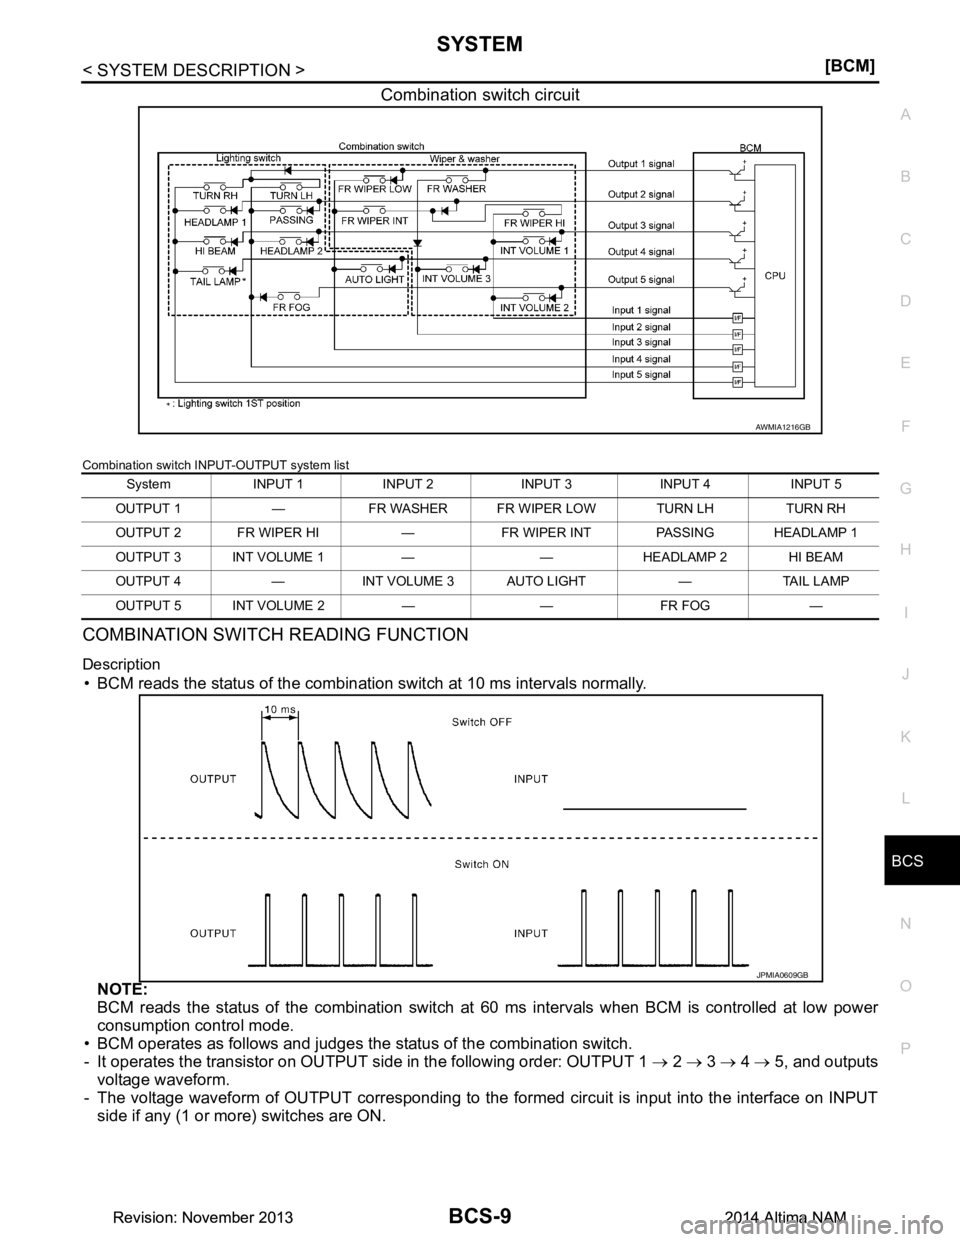 NISSAN TEANA 2014  Service Manual 
BCS
SYSTEMBCS-9
< SYSTEM DESCRIPTION > [BCM]
C 
D E
F
G H
I
J
K L
B 
A
O P
N
Combination switch circuit
Combination switch INPUT-OUTPUT system list
COMBINATION SWITCH READING FUNCTION
Description
•